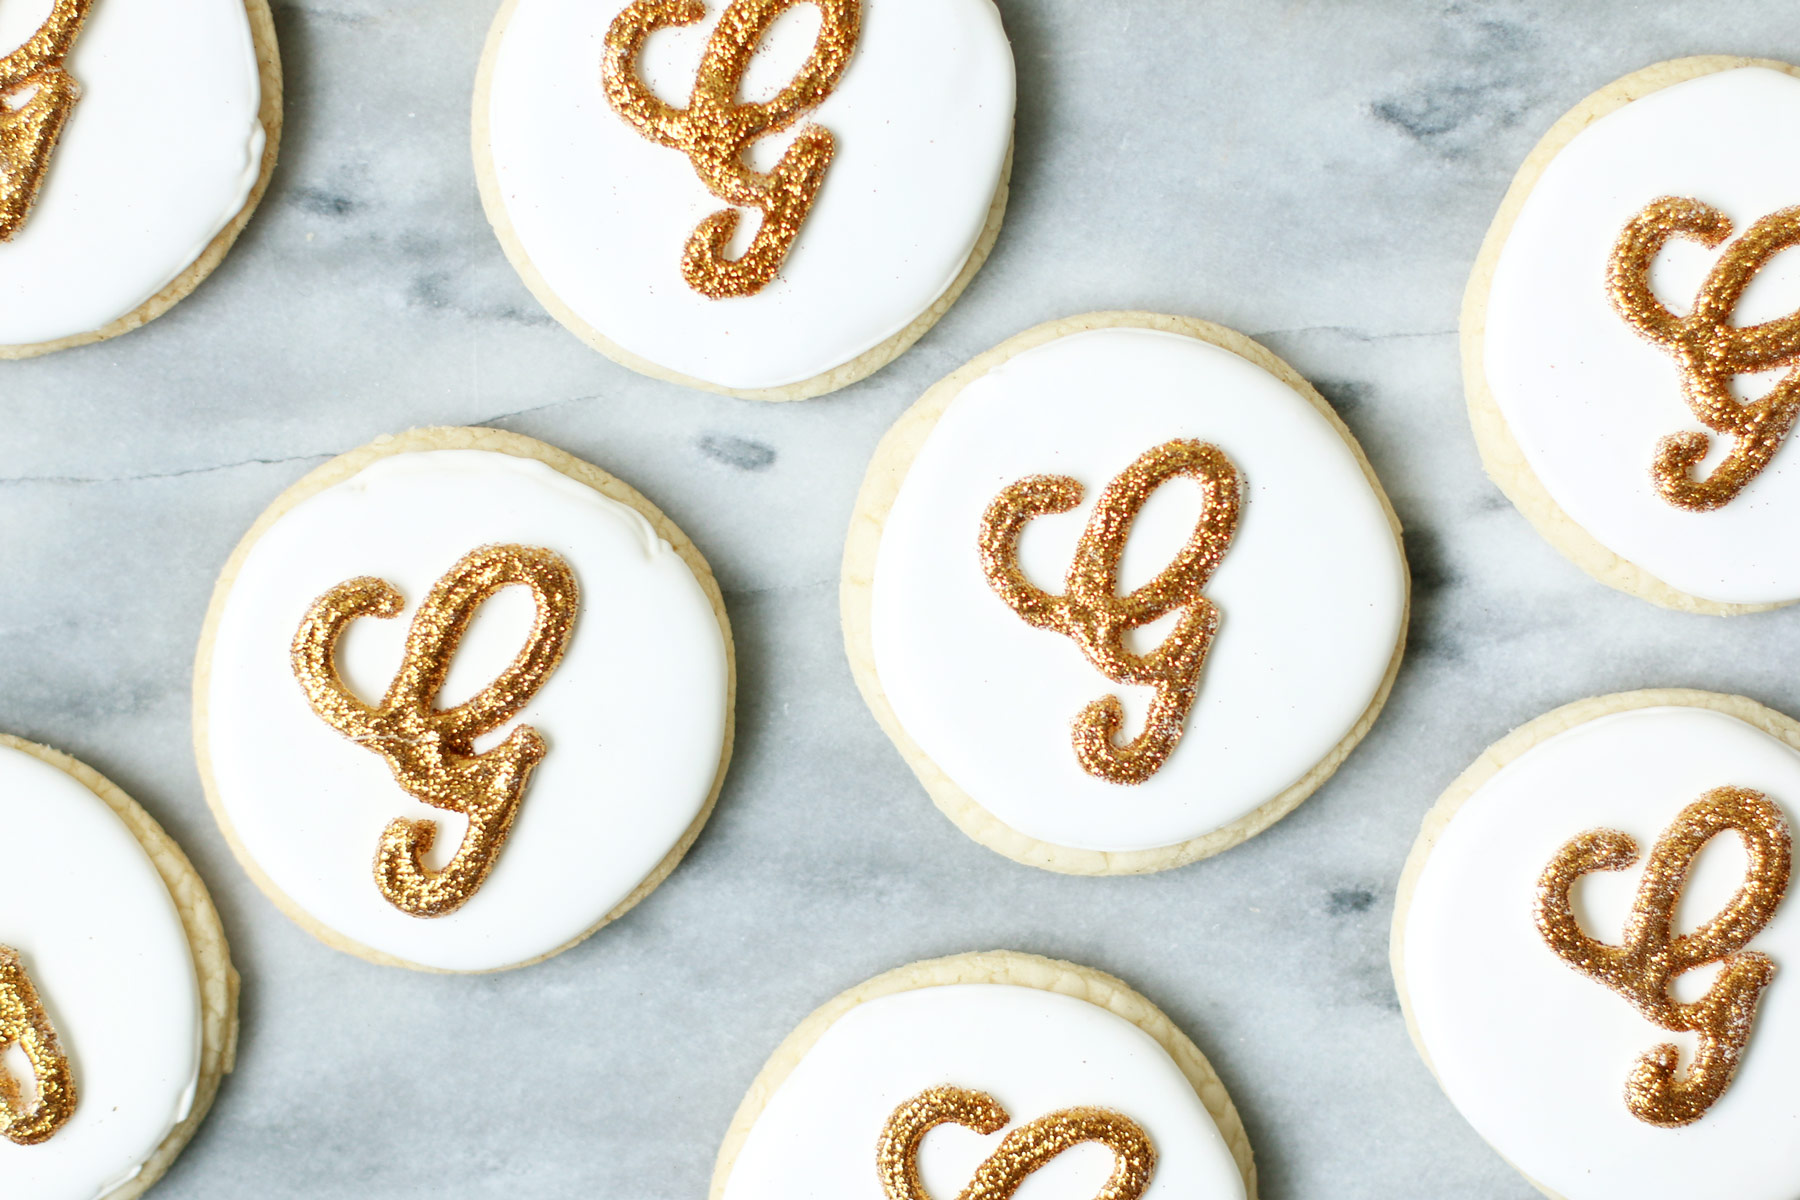 Monogramed Cookies for wedding